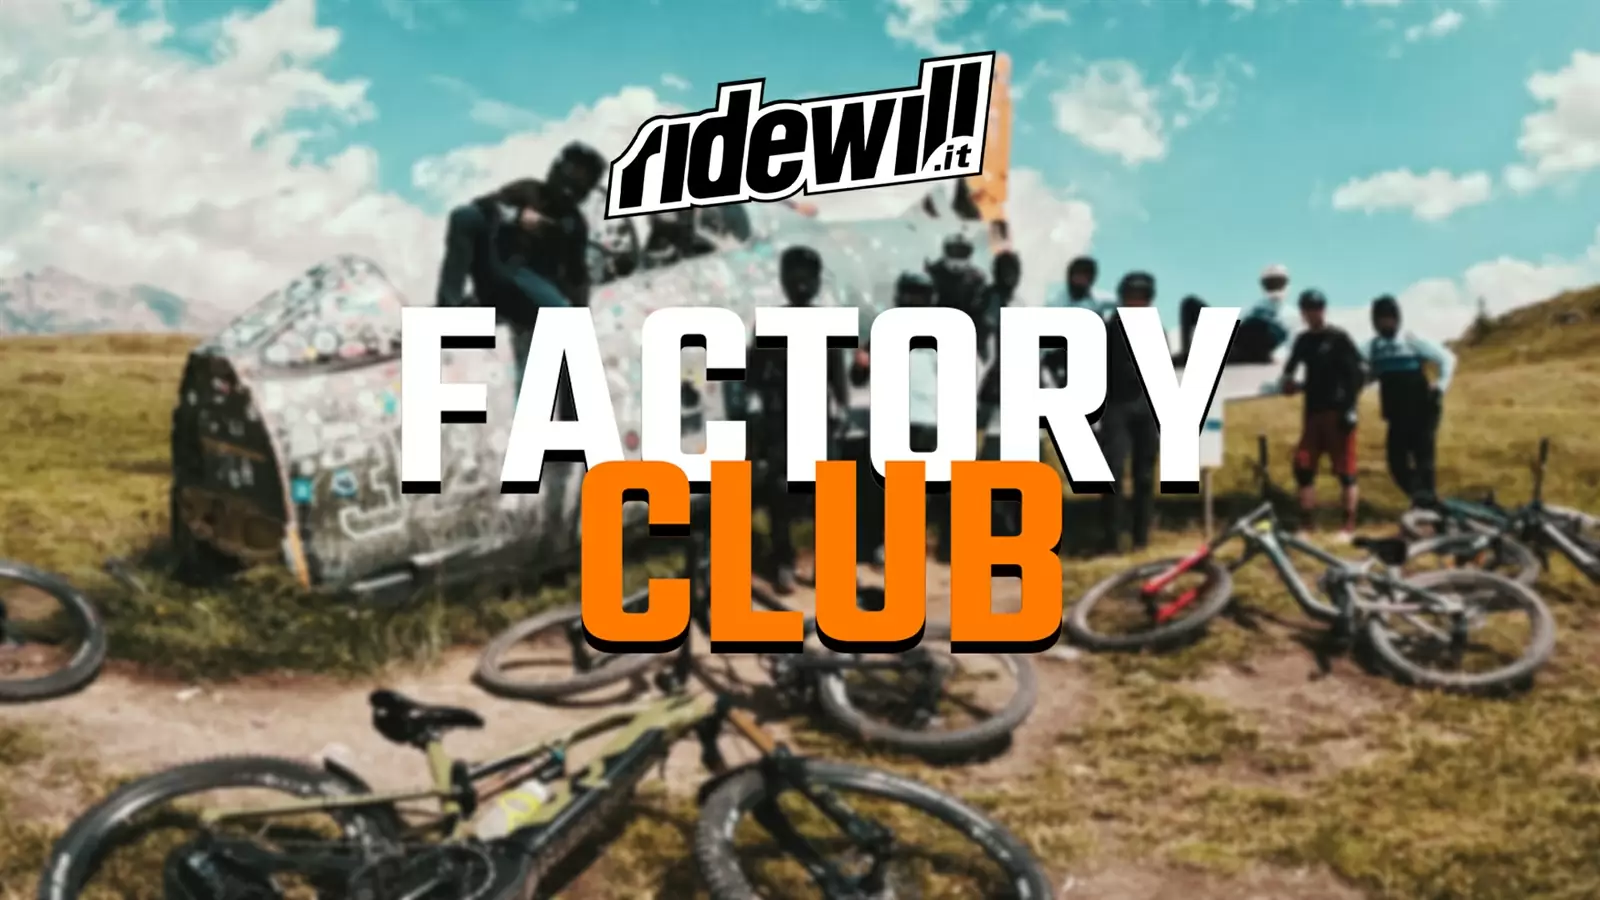 Ridewill Factory Club - image